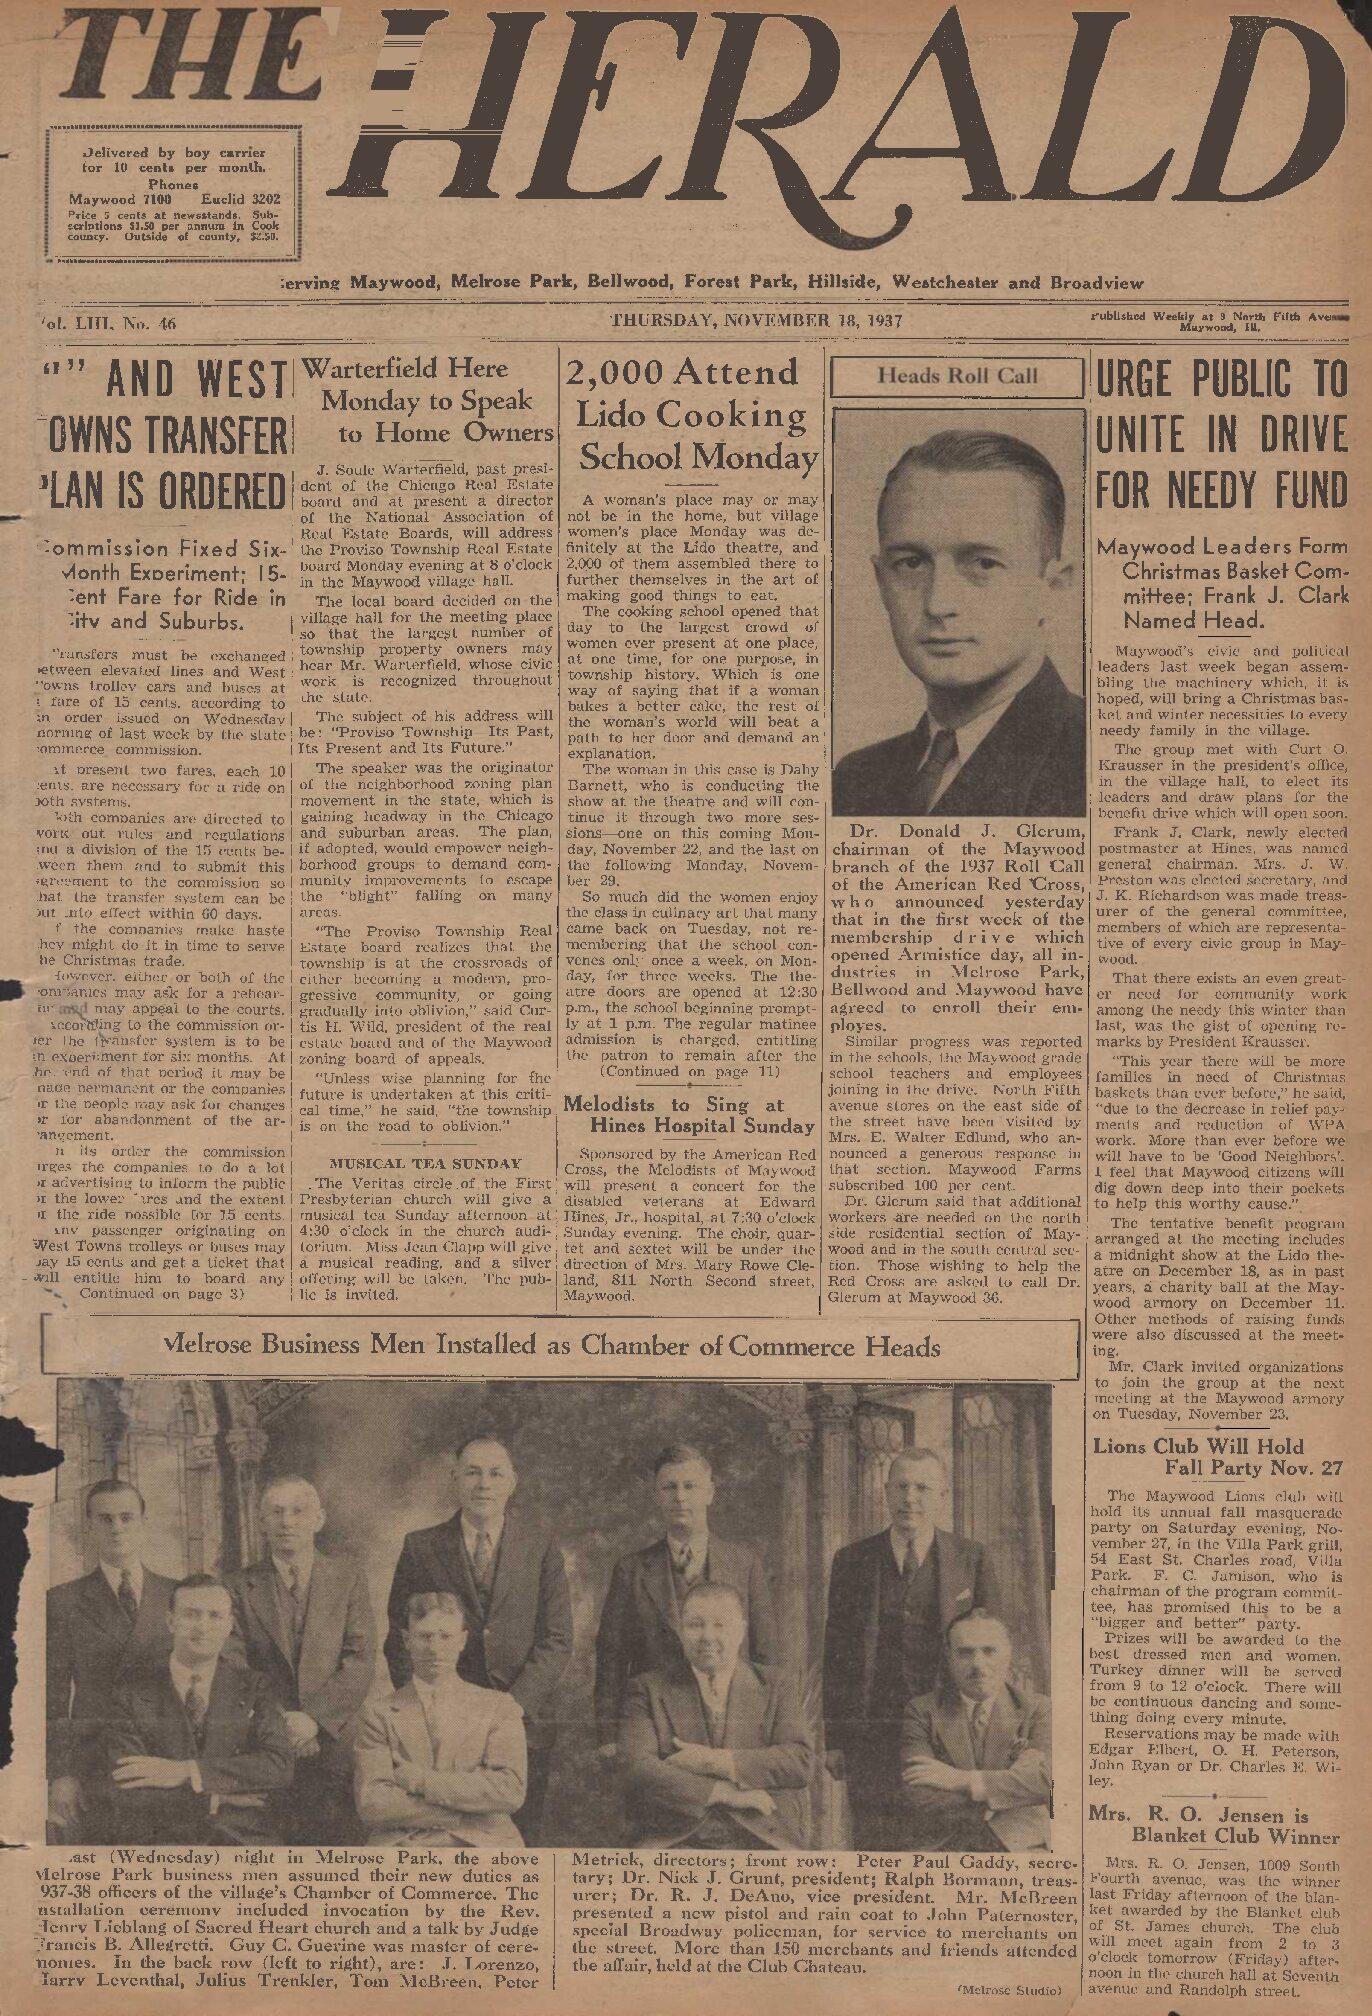 The Herald – 19371118